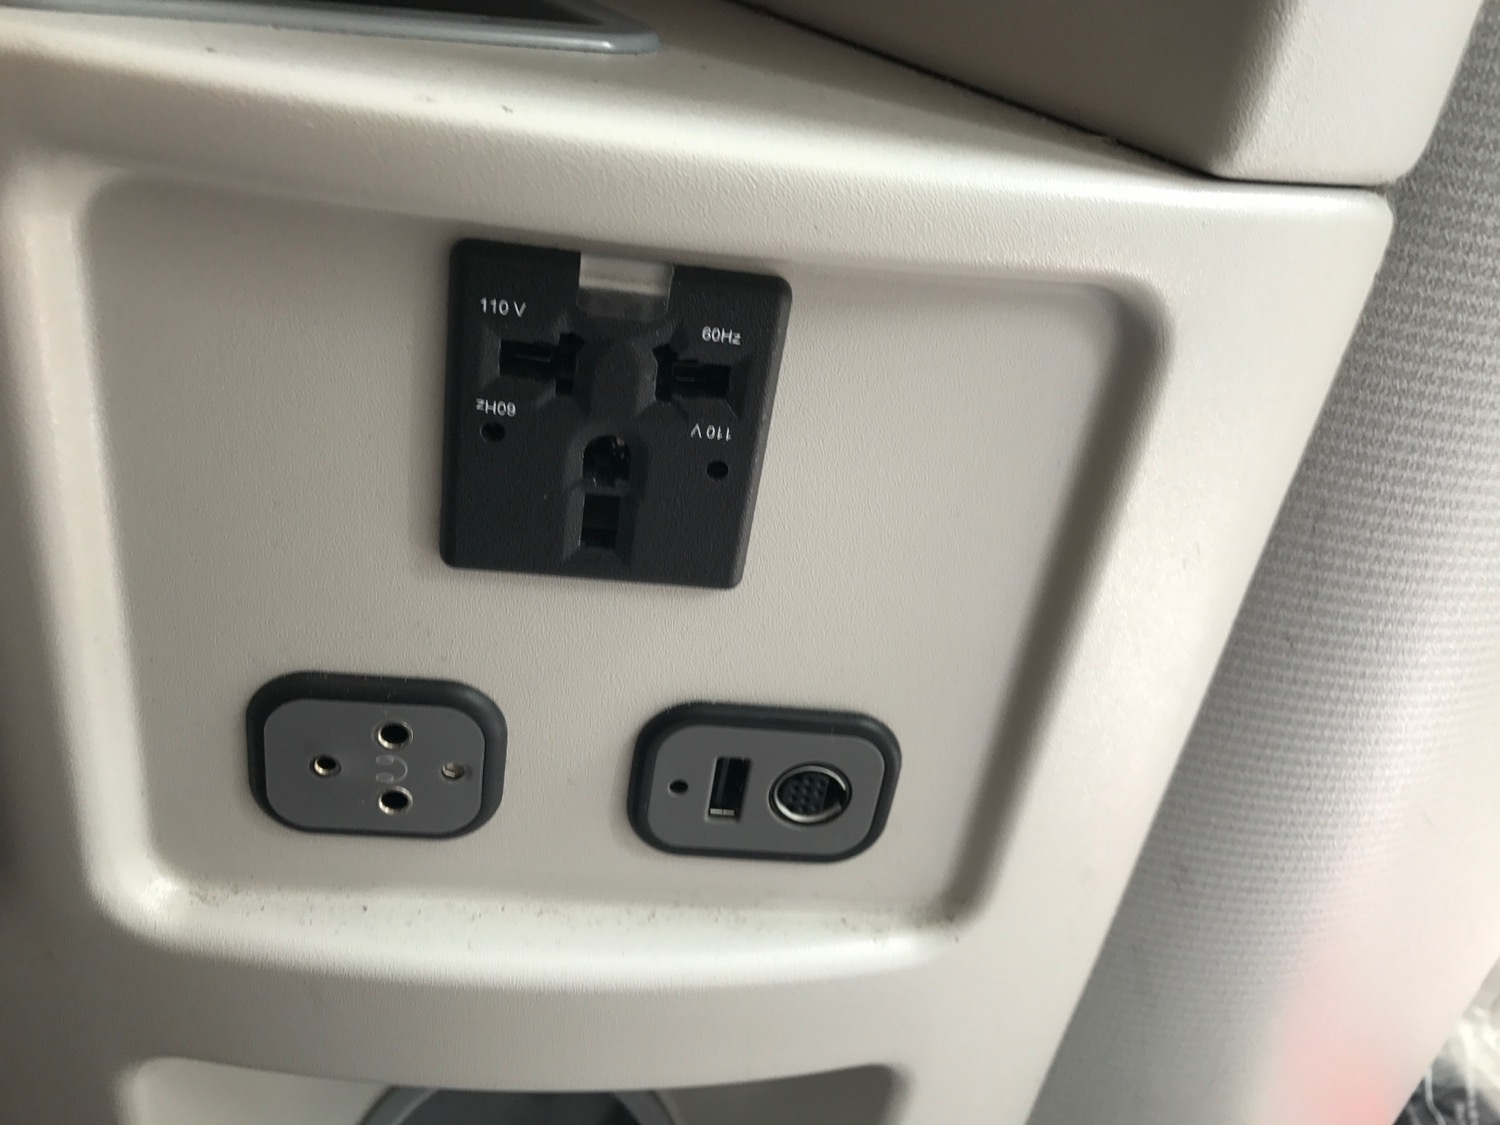 a close up of a plug and socket